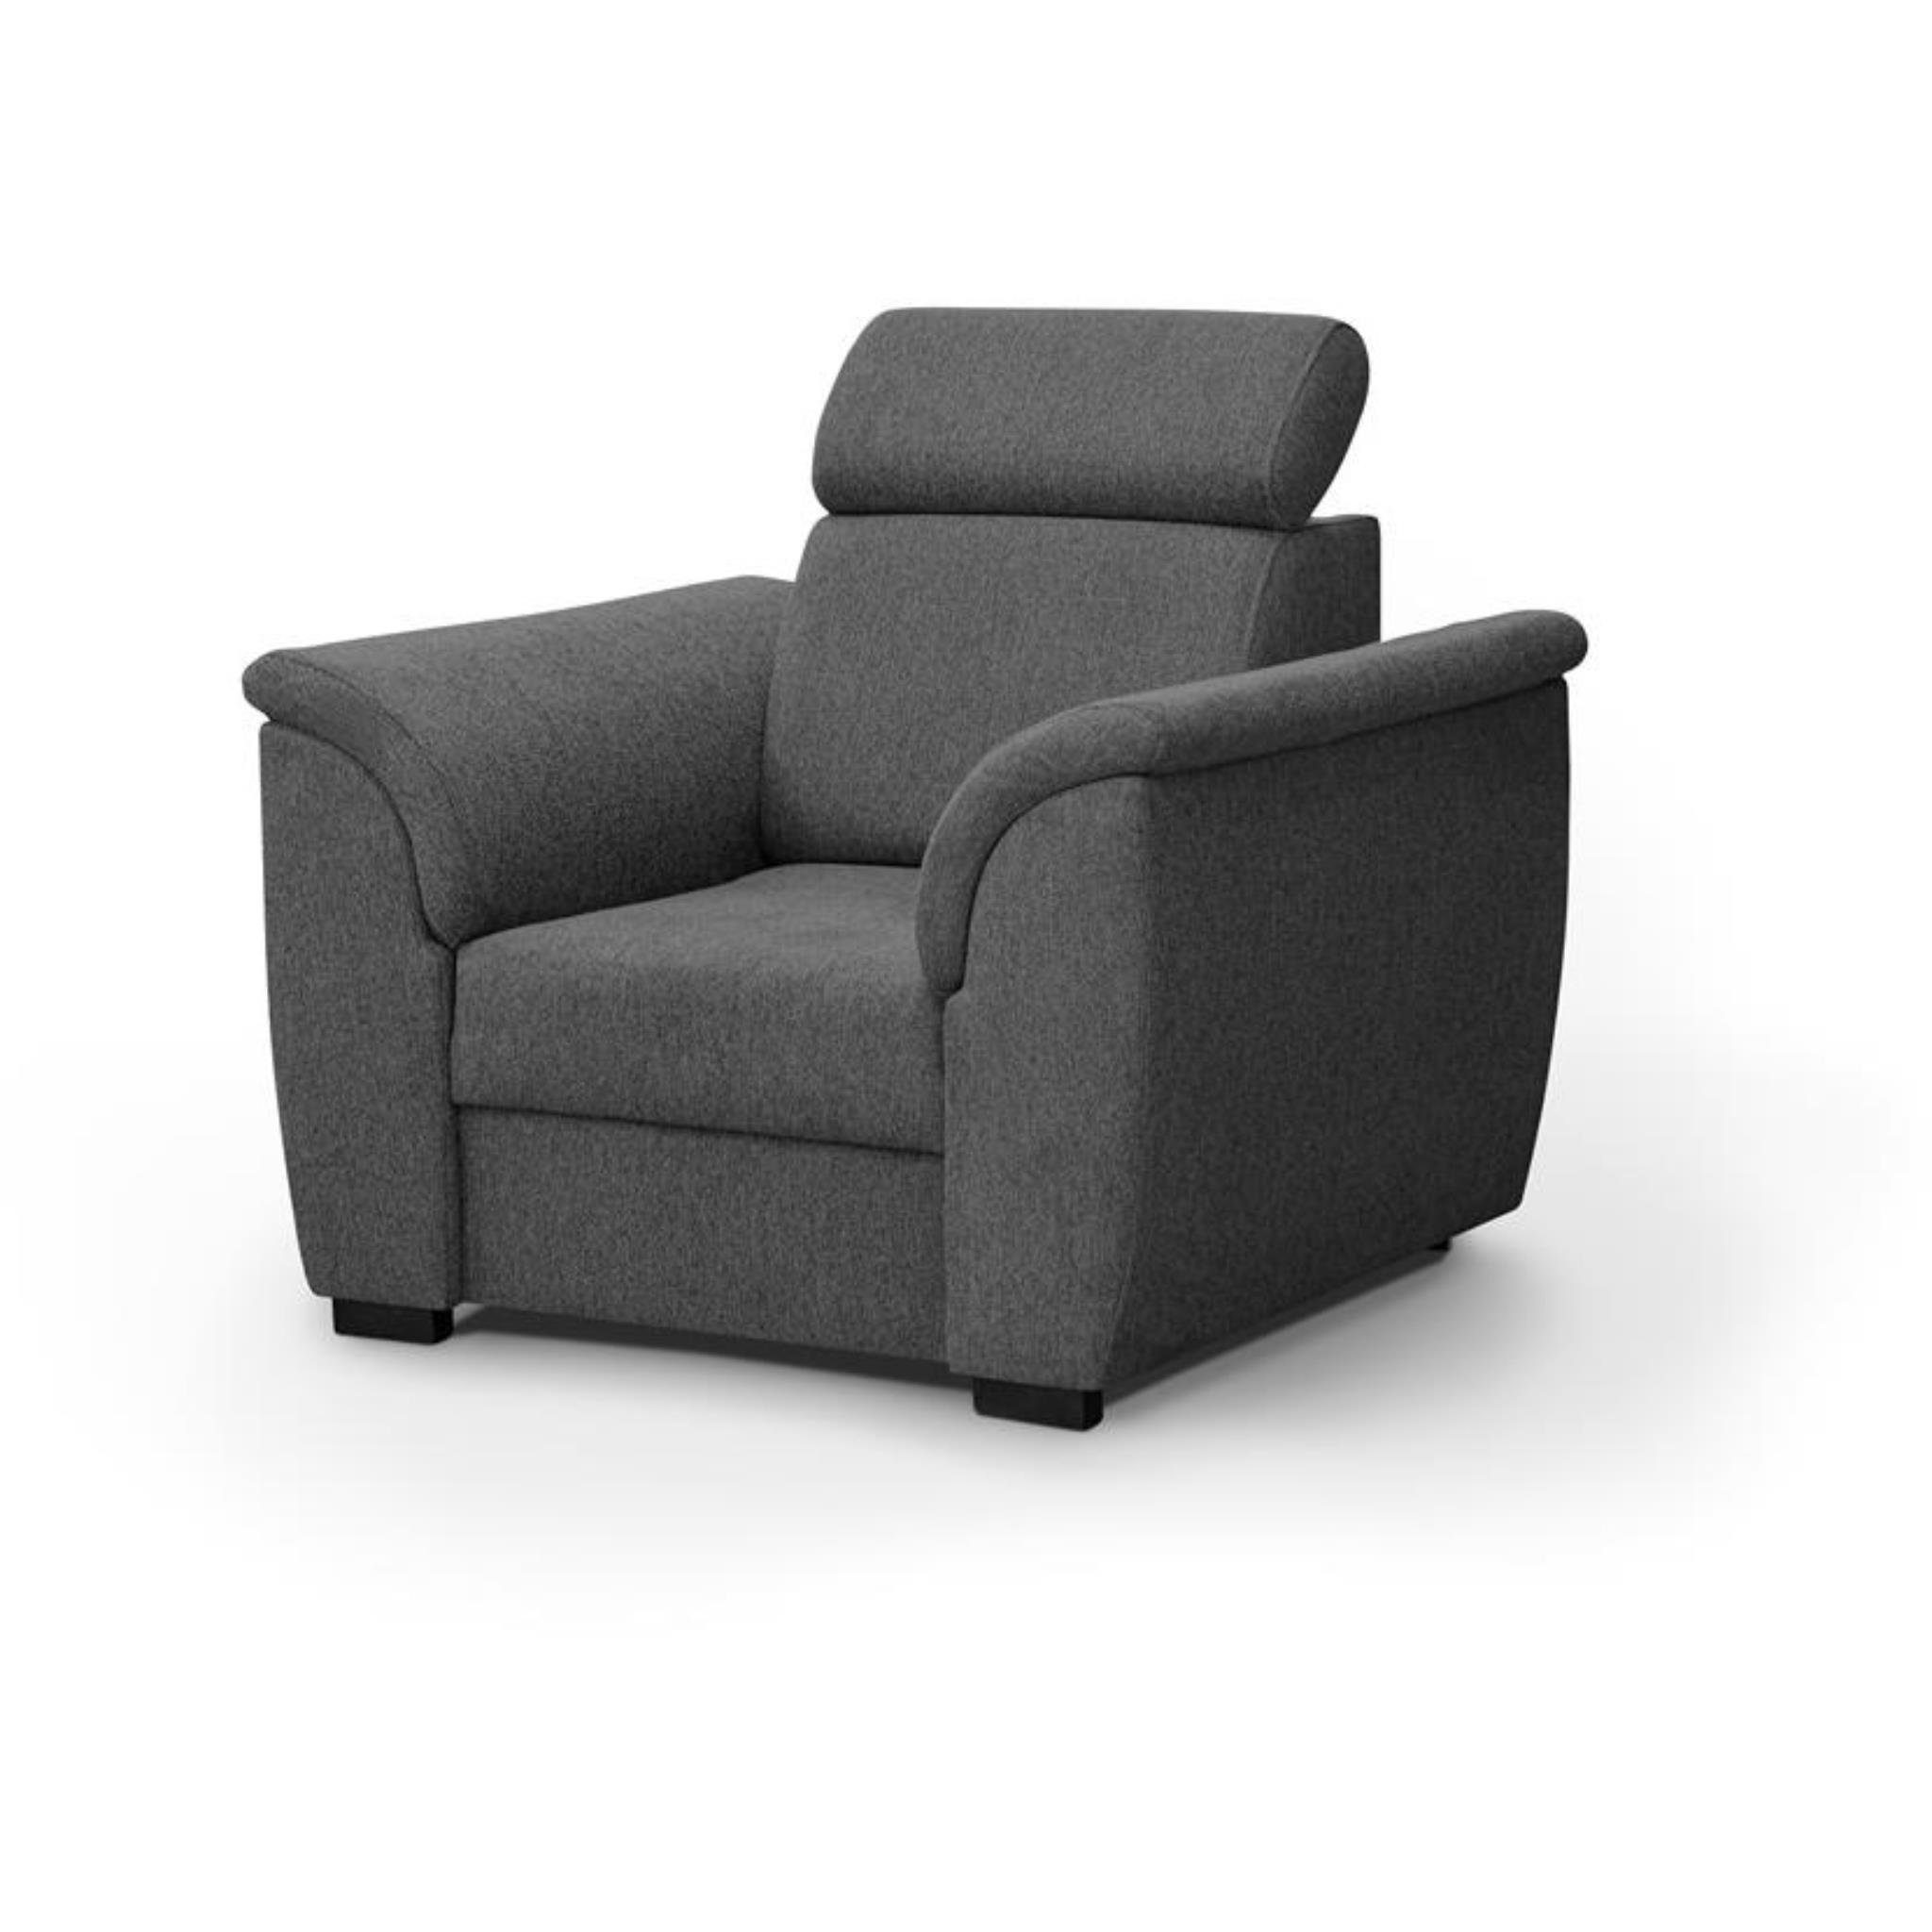 Beautysofa Relaxsessel Madera (modern mit mit Sessel 05) Lounge verstellbare Kopfstütze (matana stilvoll Wellenfedern), Polstersessel Dunkelgrau